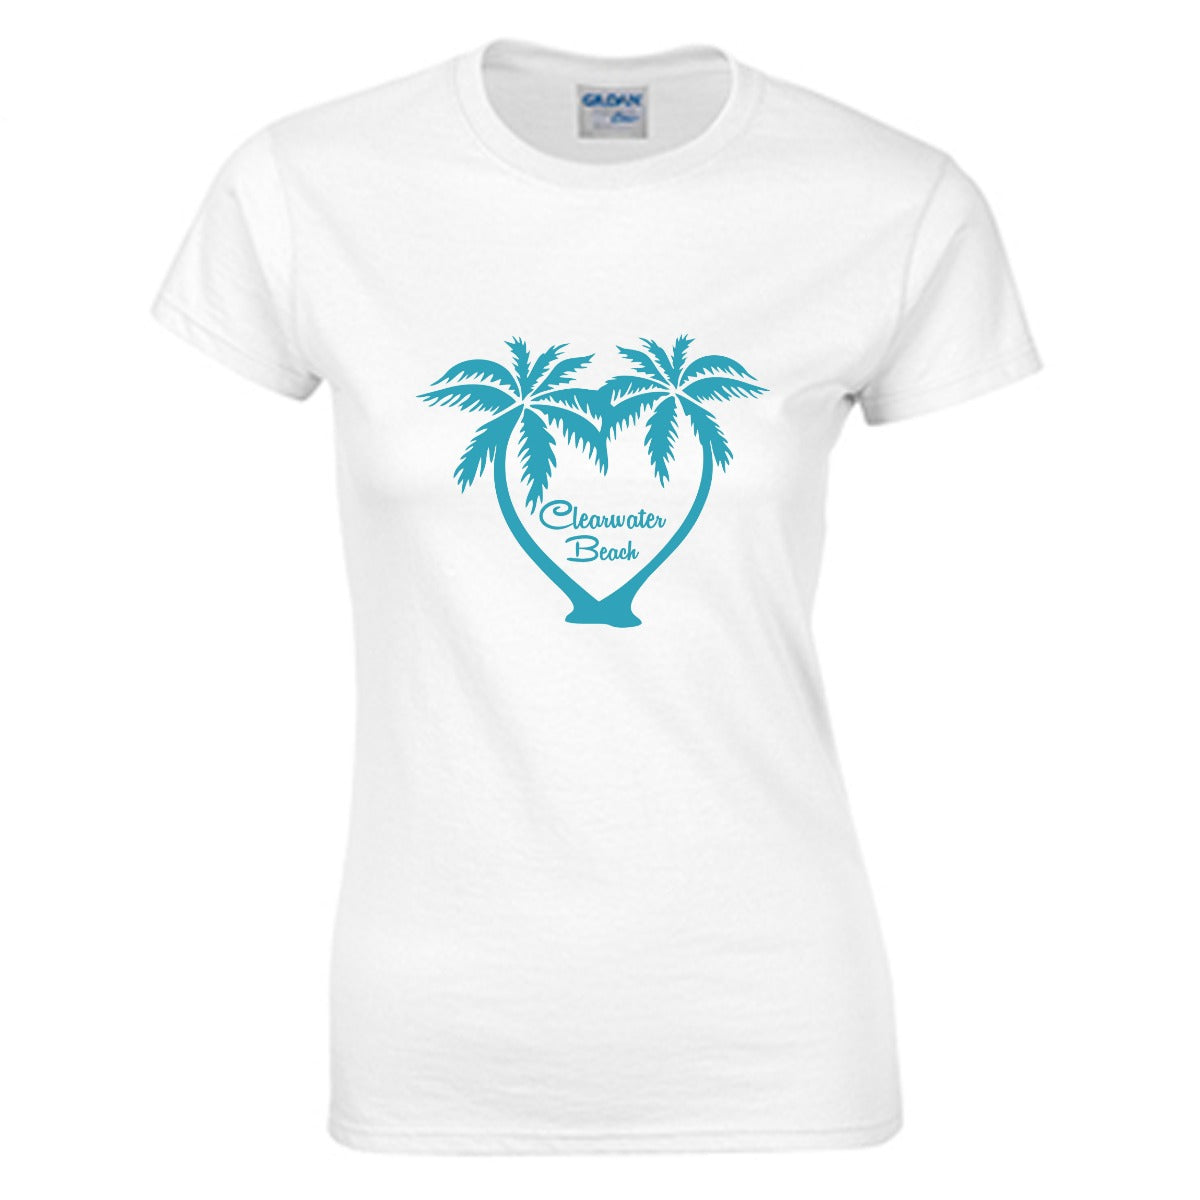 Clearwater Beach Women's T-shirt (100% Cotton) - T0367